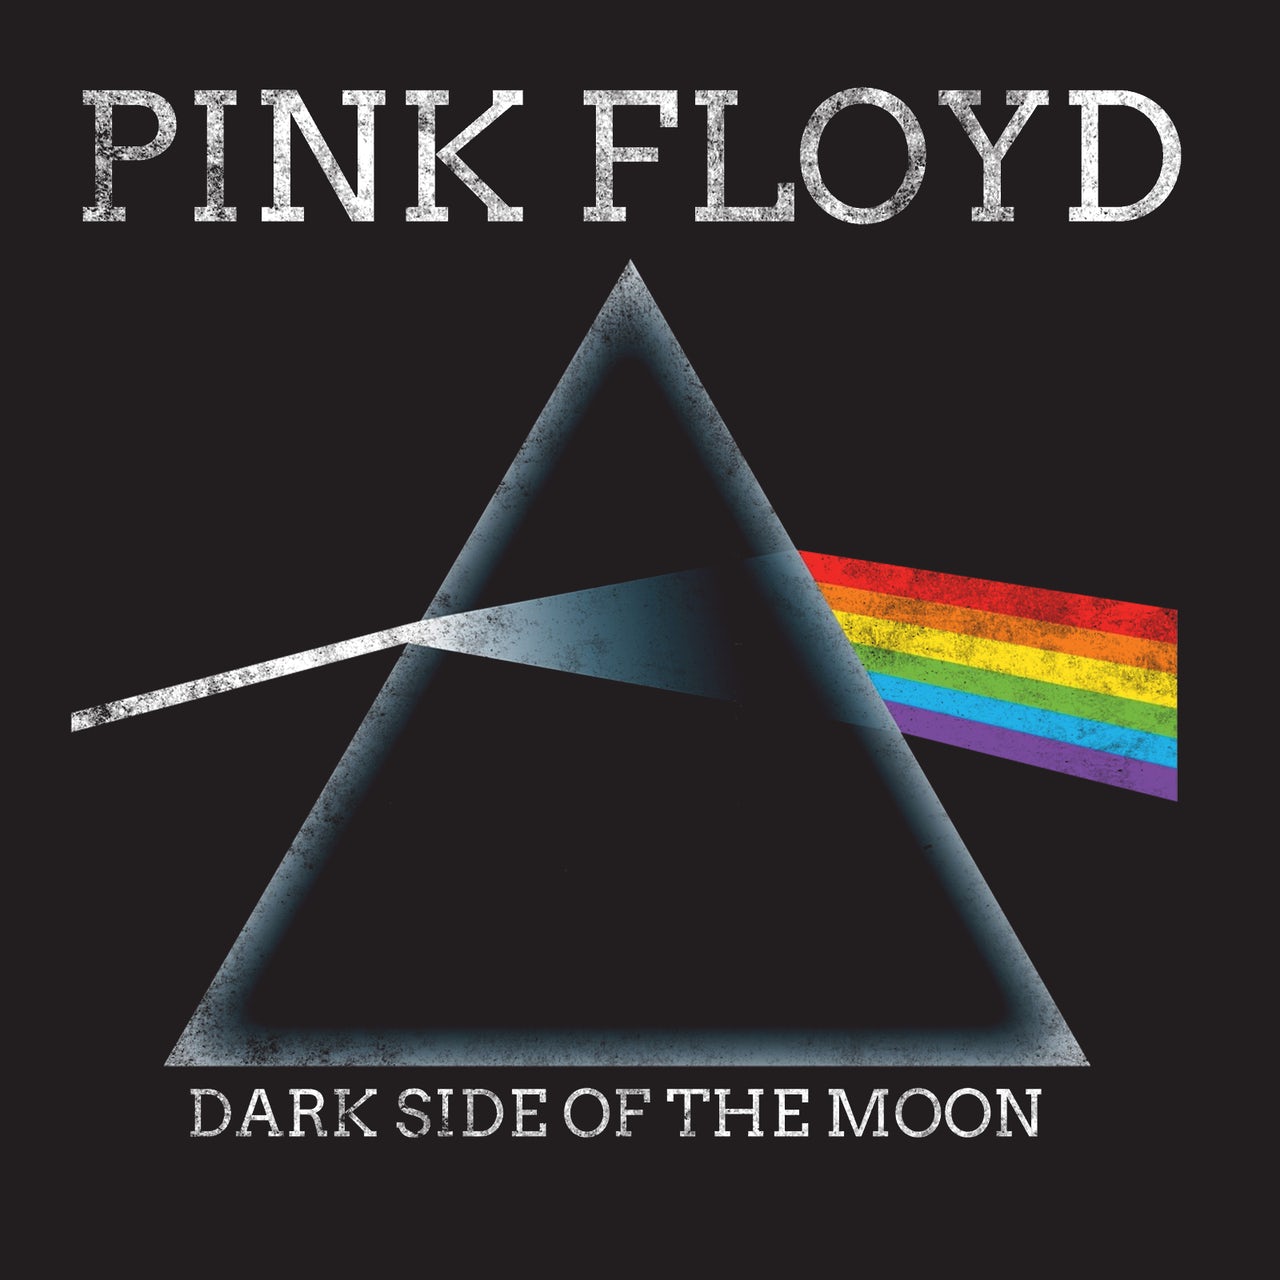 Пинк Флойд Призма. Дарксайд Пинк Флойд. Тёмная сторона Луны Пинк Флойд. Pink Floyd the Dark Side of the Moon 1973 обложка. Pink floyd dark side слушать